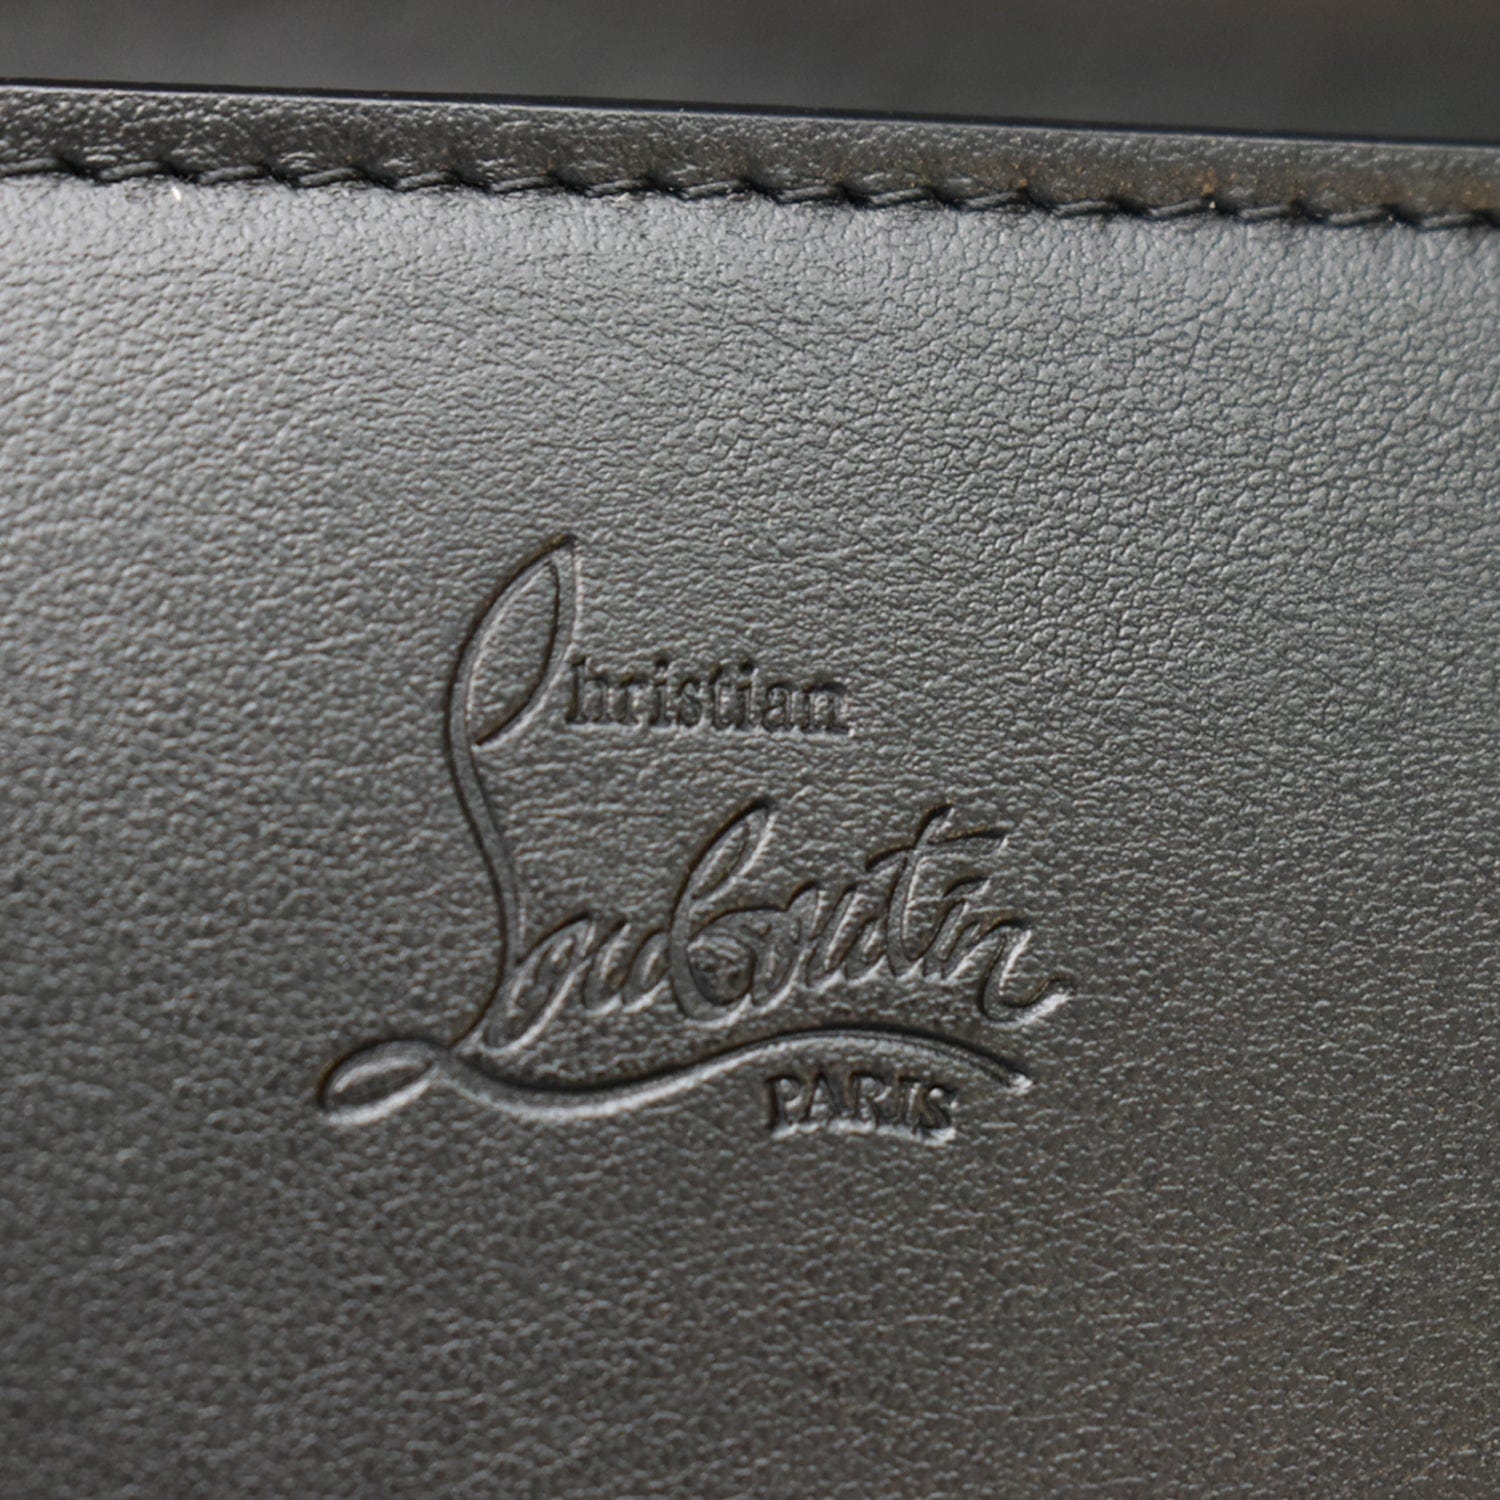 Christian Louboutin Clutch Mini Paloma Studded Glitter Gold Leather Sh -  MyDesignerly